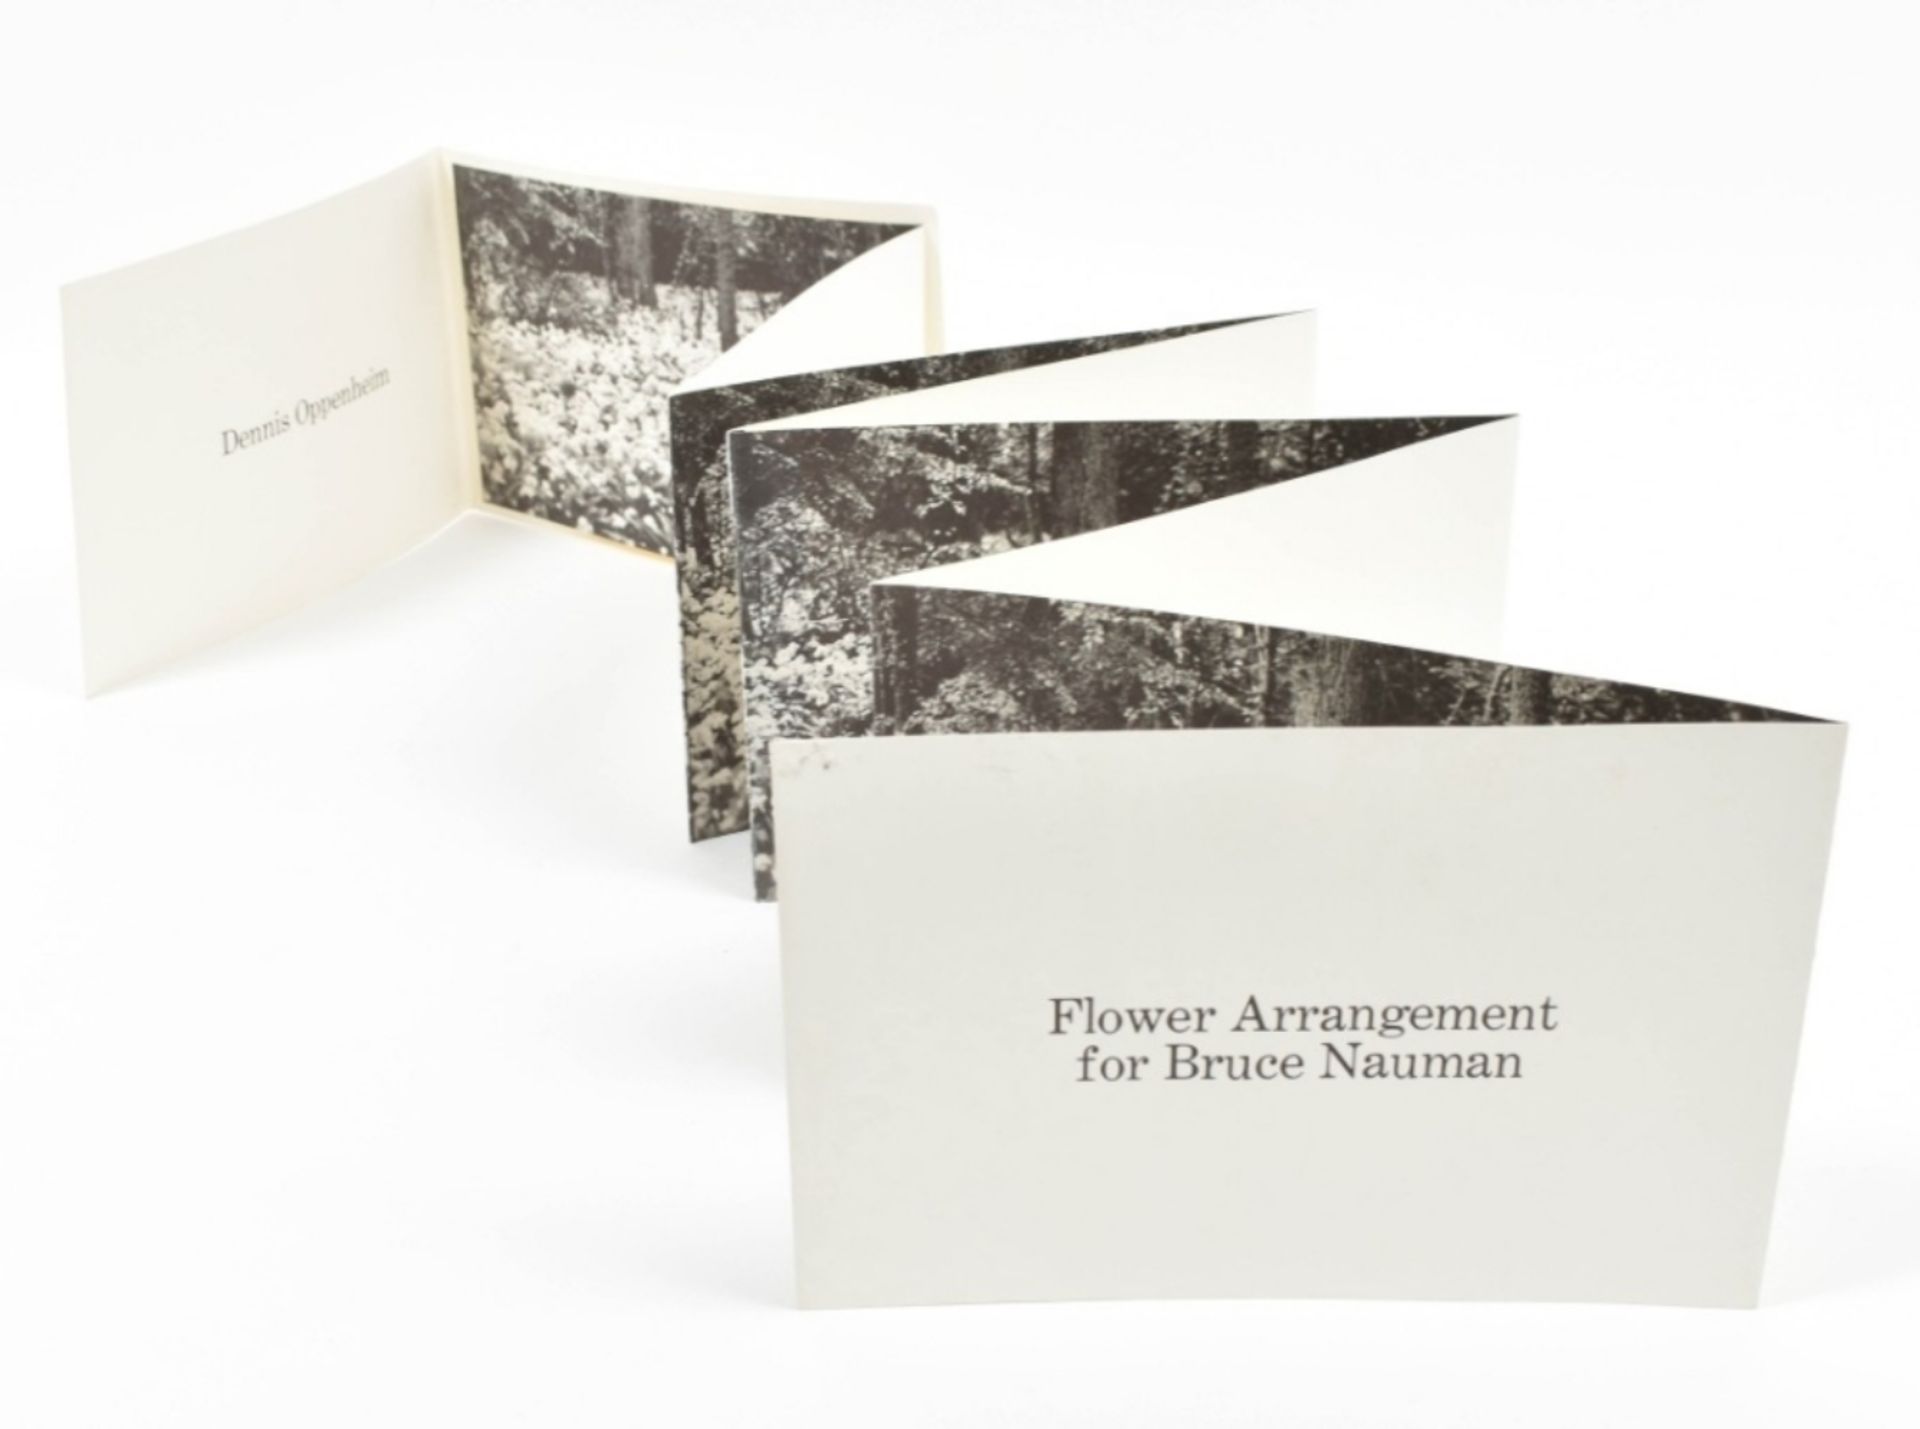 [s and 1970s] Dennis Oppenheim, Flower Arrangement for Bruce Nauman